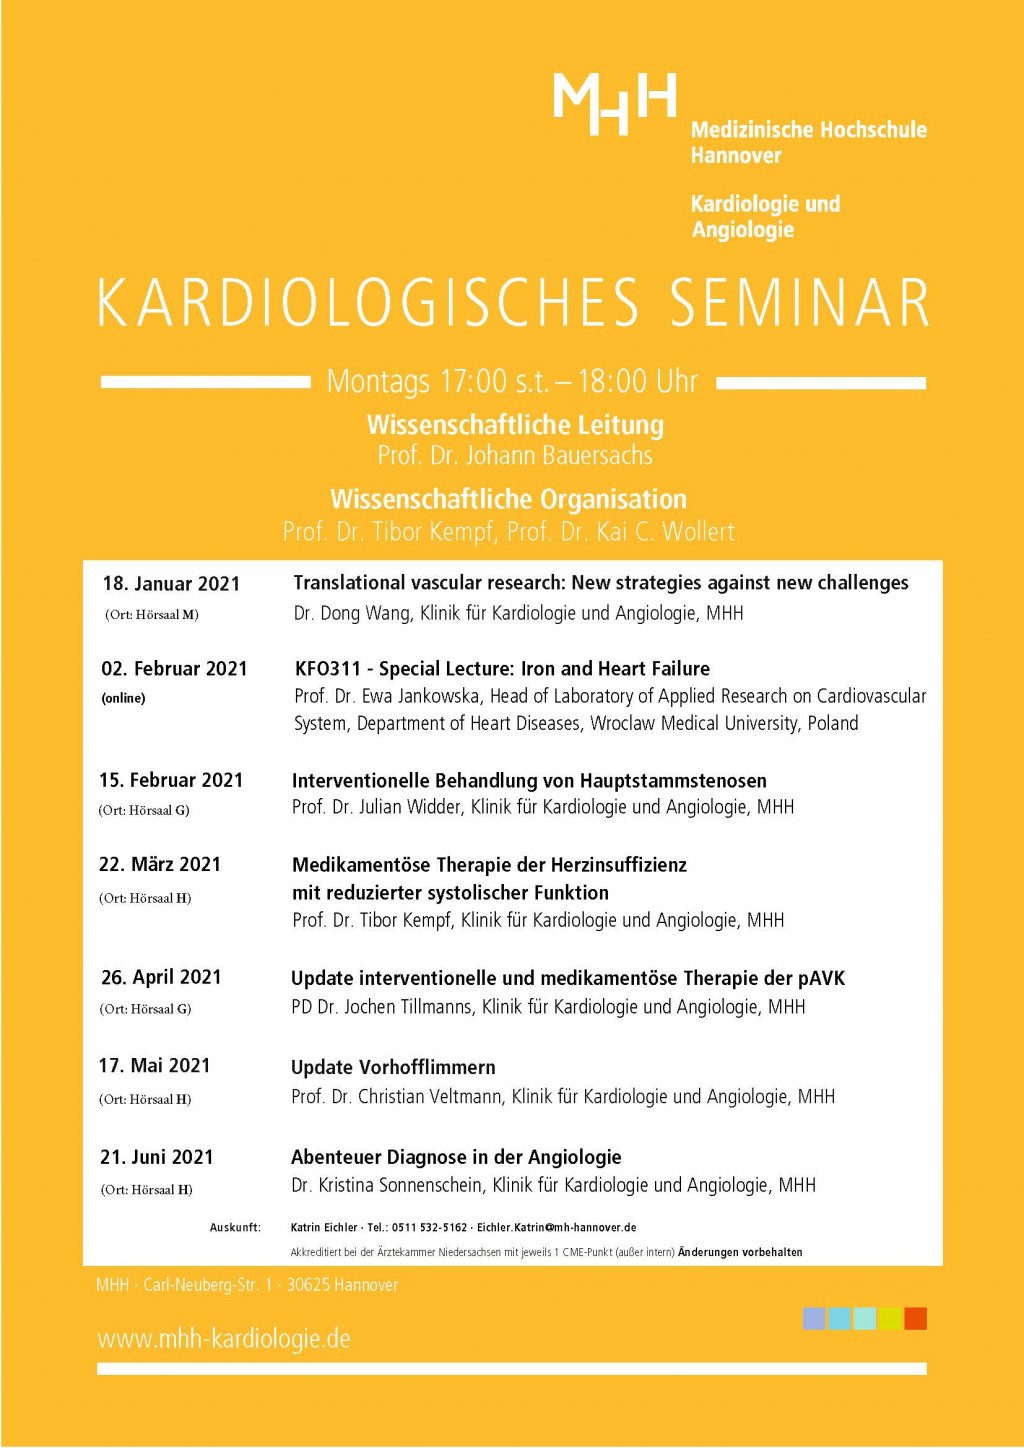 MHH-Kardiologisches-Seminar-2021_Jan_Jun-6c1781f5